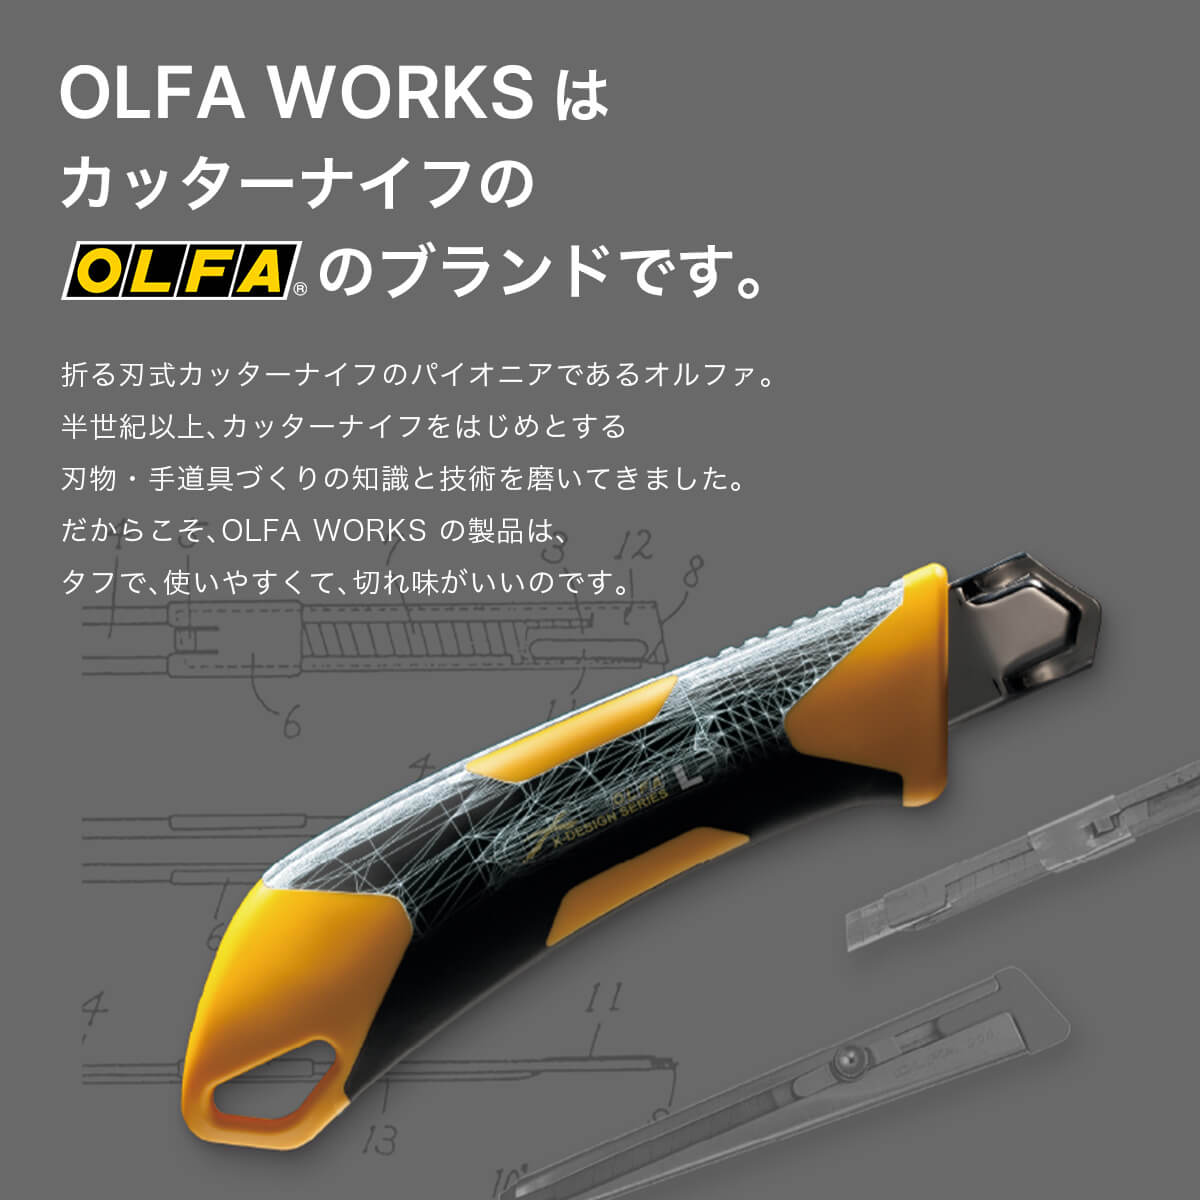 OLFA WORKS